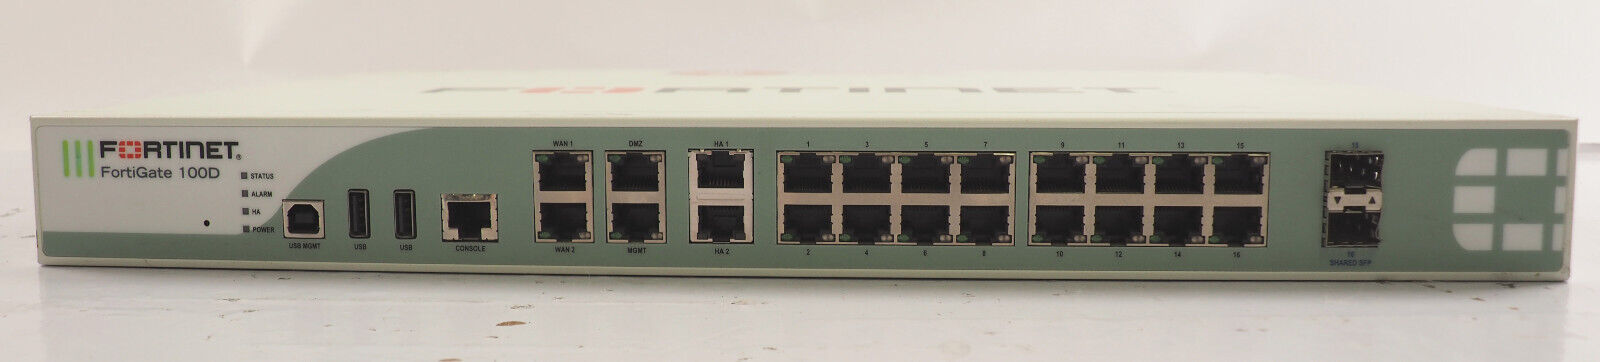 Fortinet FortiGate-100D FG-100D P11510-03-02 Network Security Firewall Appliance